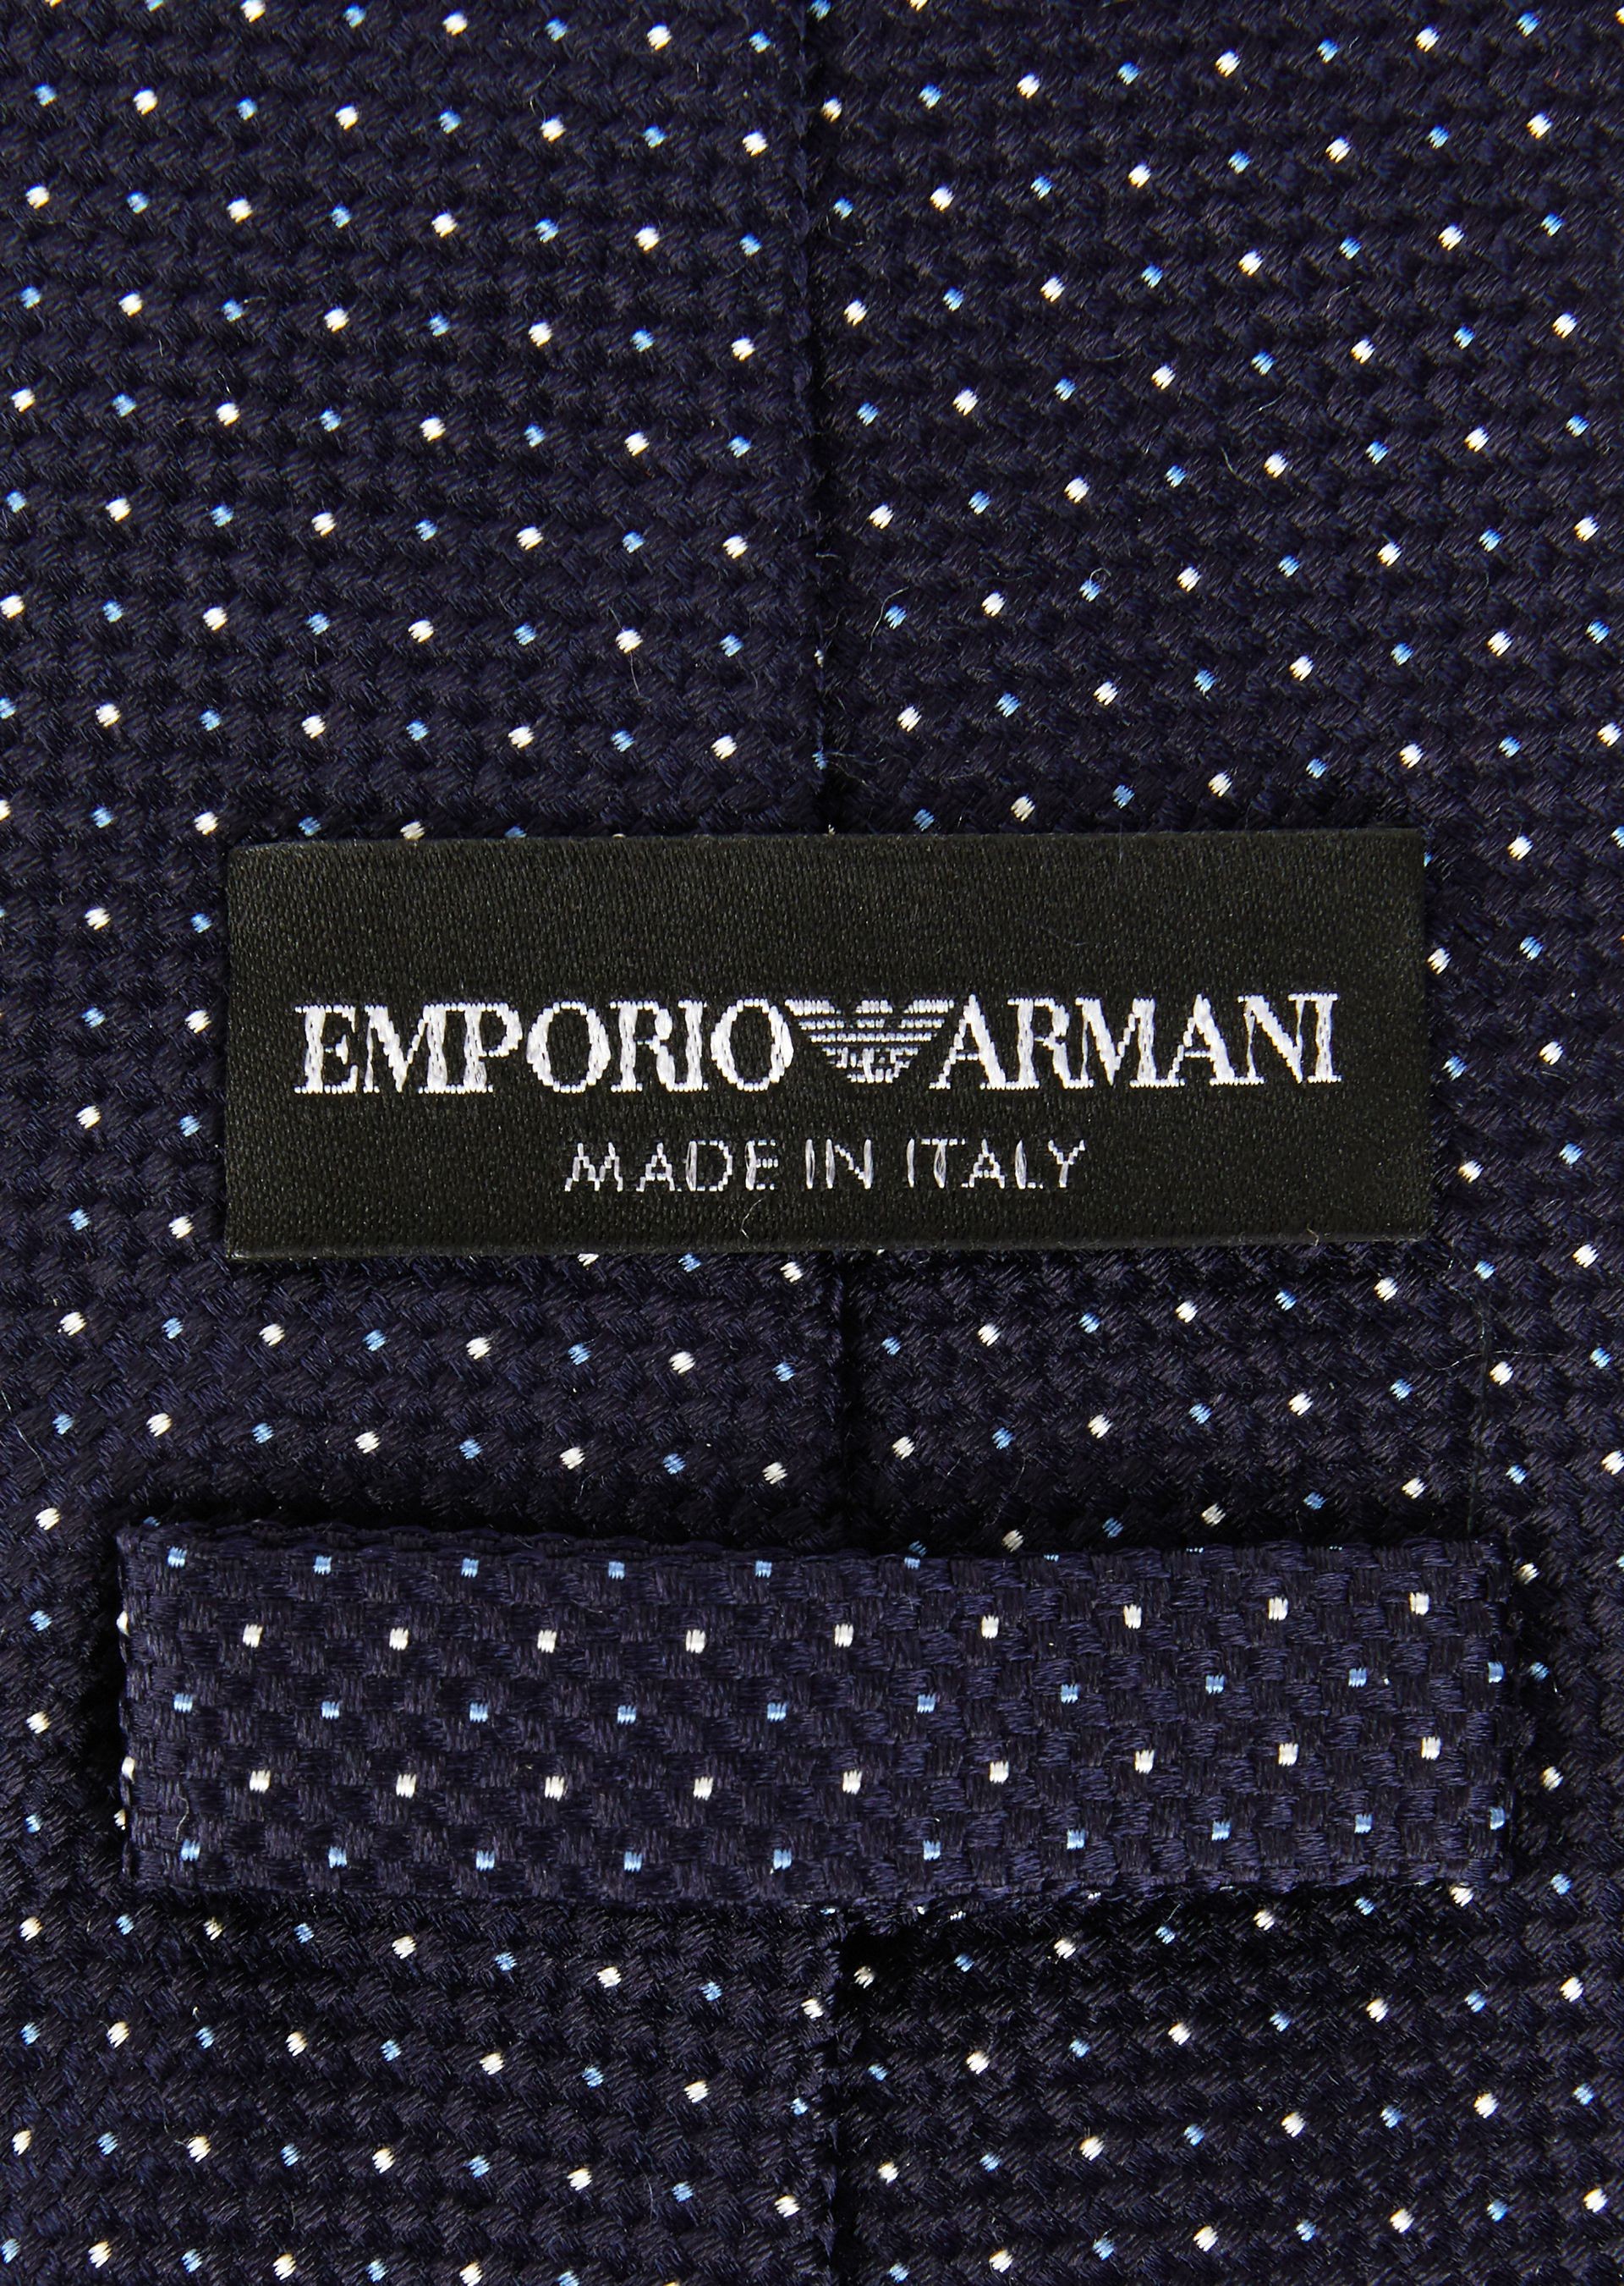 Emporio Armani Micro Pois Silk Tie  3401828P307100036 - New Collection Spring Summer 2018